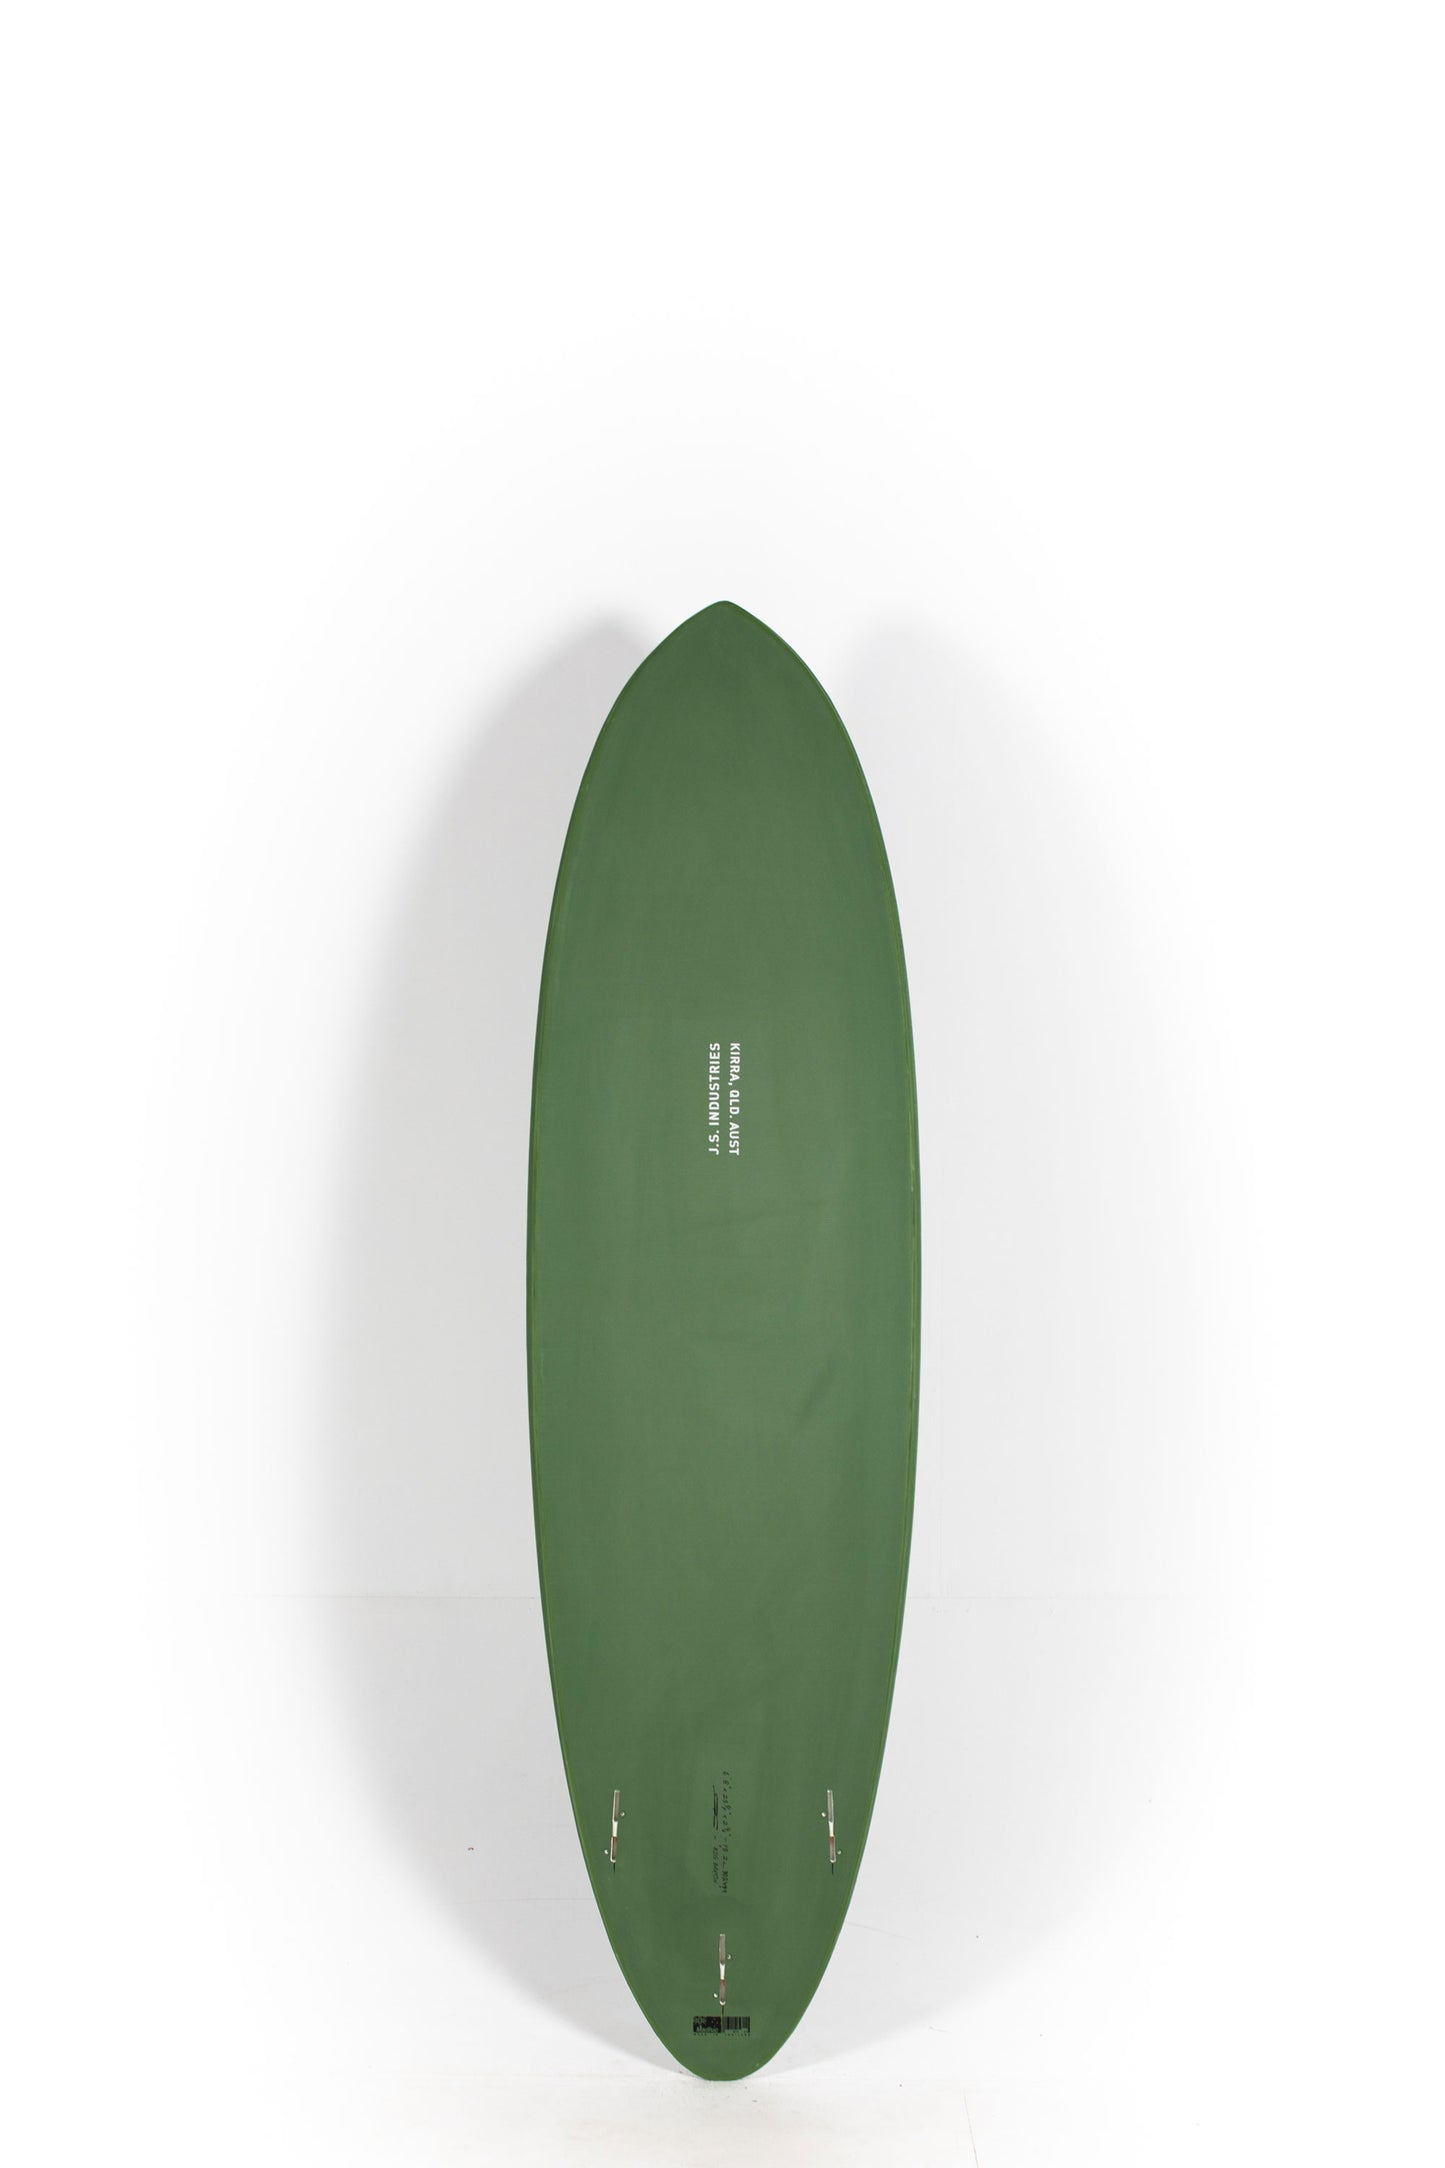 Pukas Surf Shop - JS Surfboards - BIG BARON SOFT - 6'8" x 20,75 x  2,62 x 40,2L. - BIGBARON68